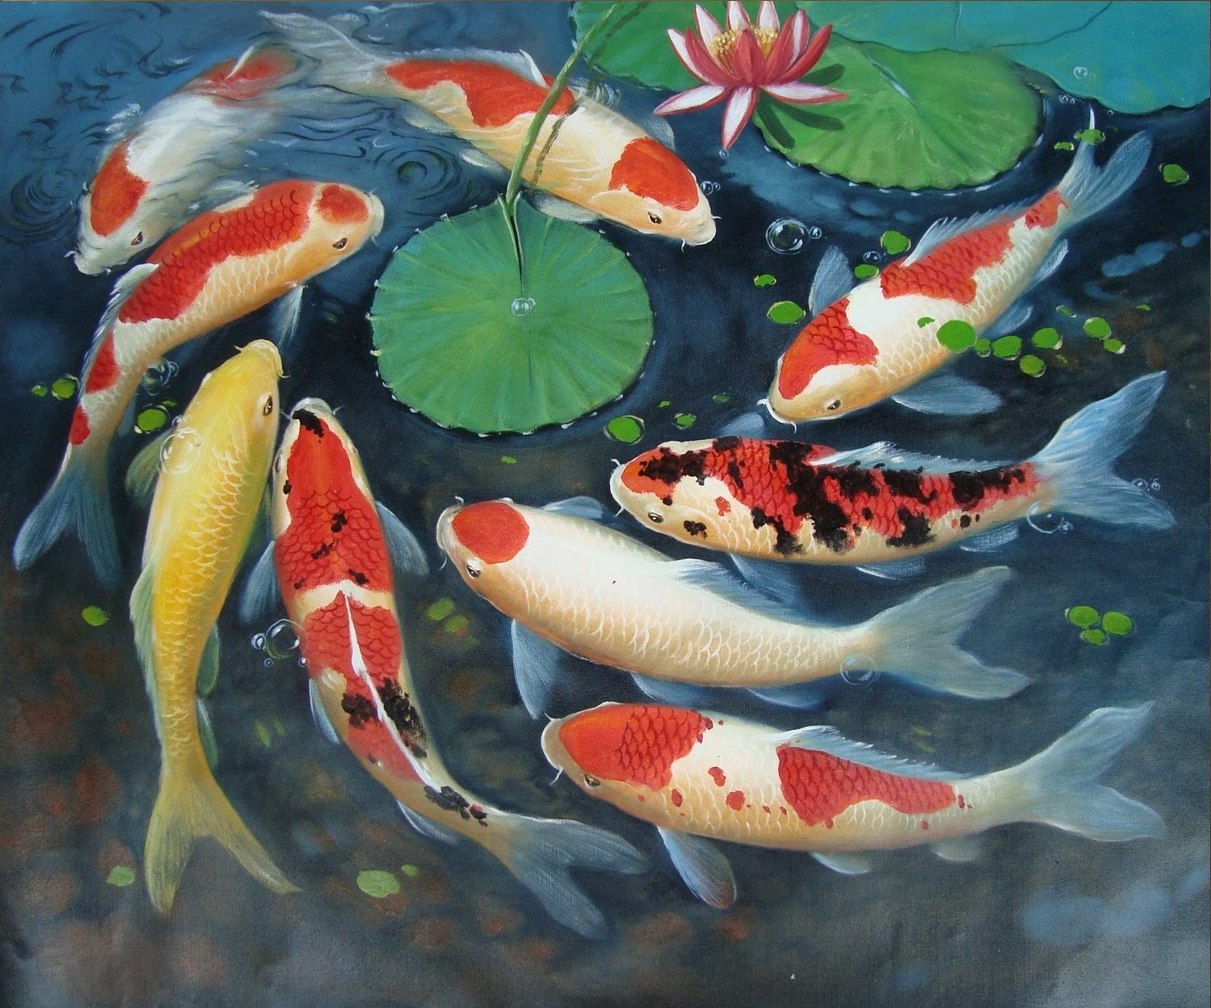 wallpaper ikan koi,koi,fish pond,pond,feeder fish,painting